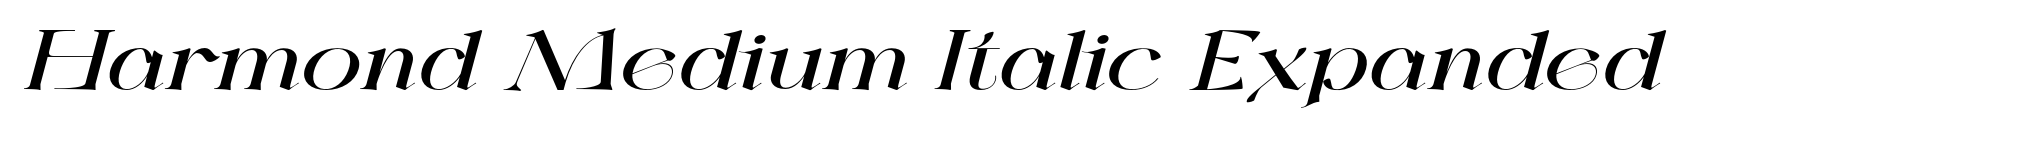 Harmond Medium Italic Expanded image